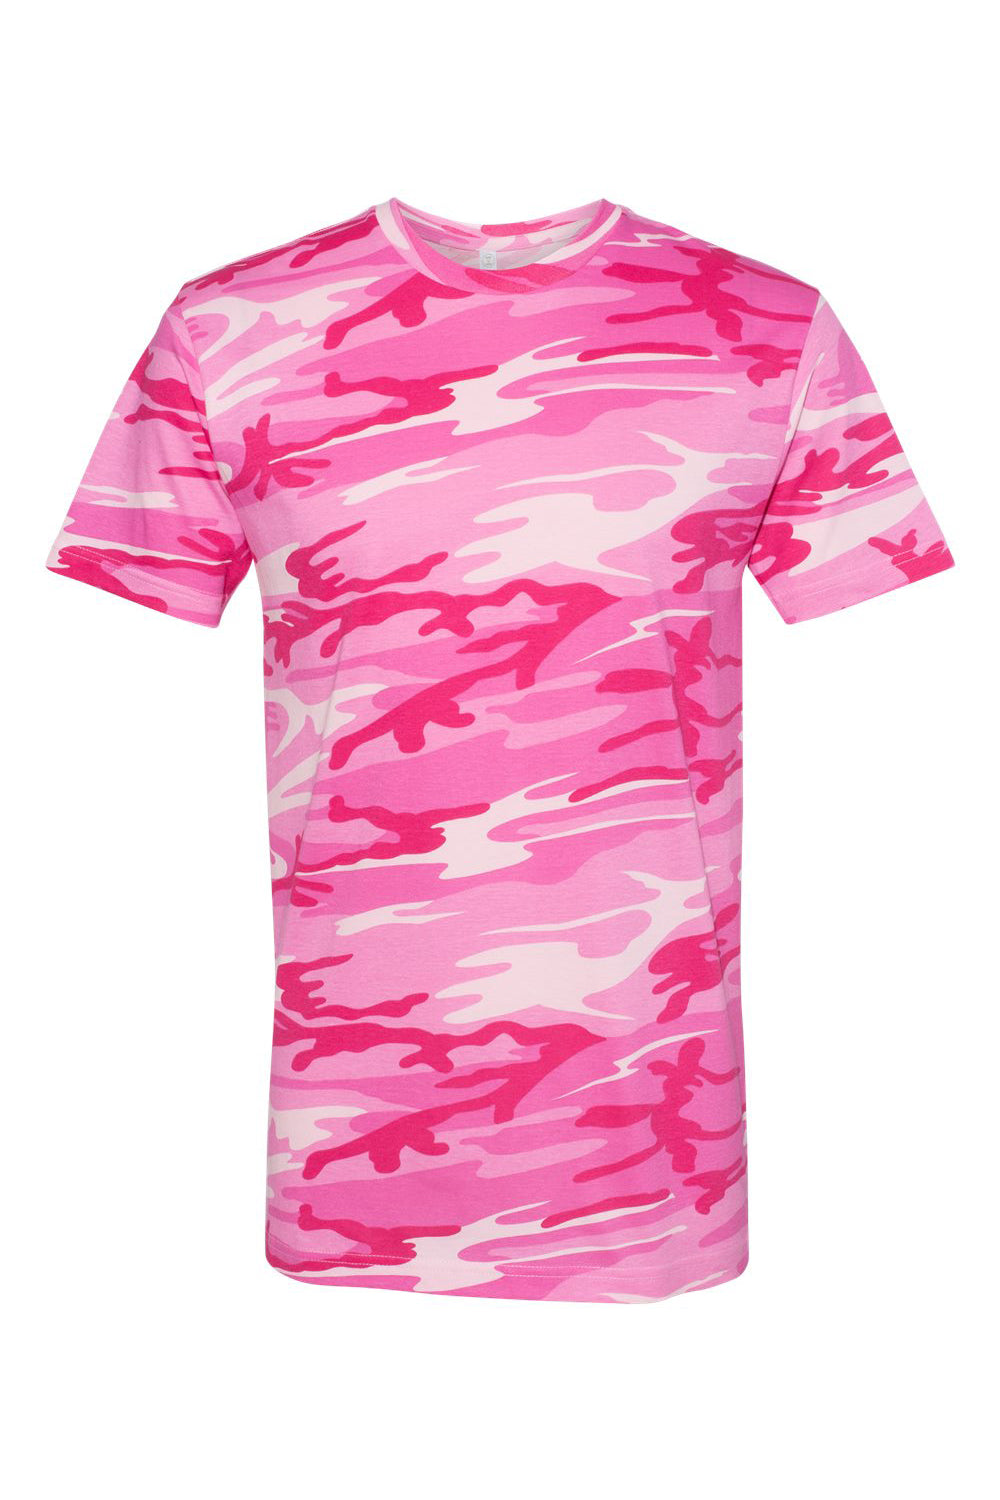 Code Five 3907 Mens Short Sleeve Crewneck T-Shirt Pink Woodland Flat Front